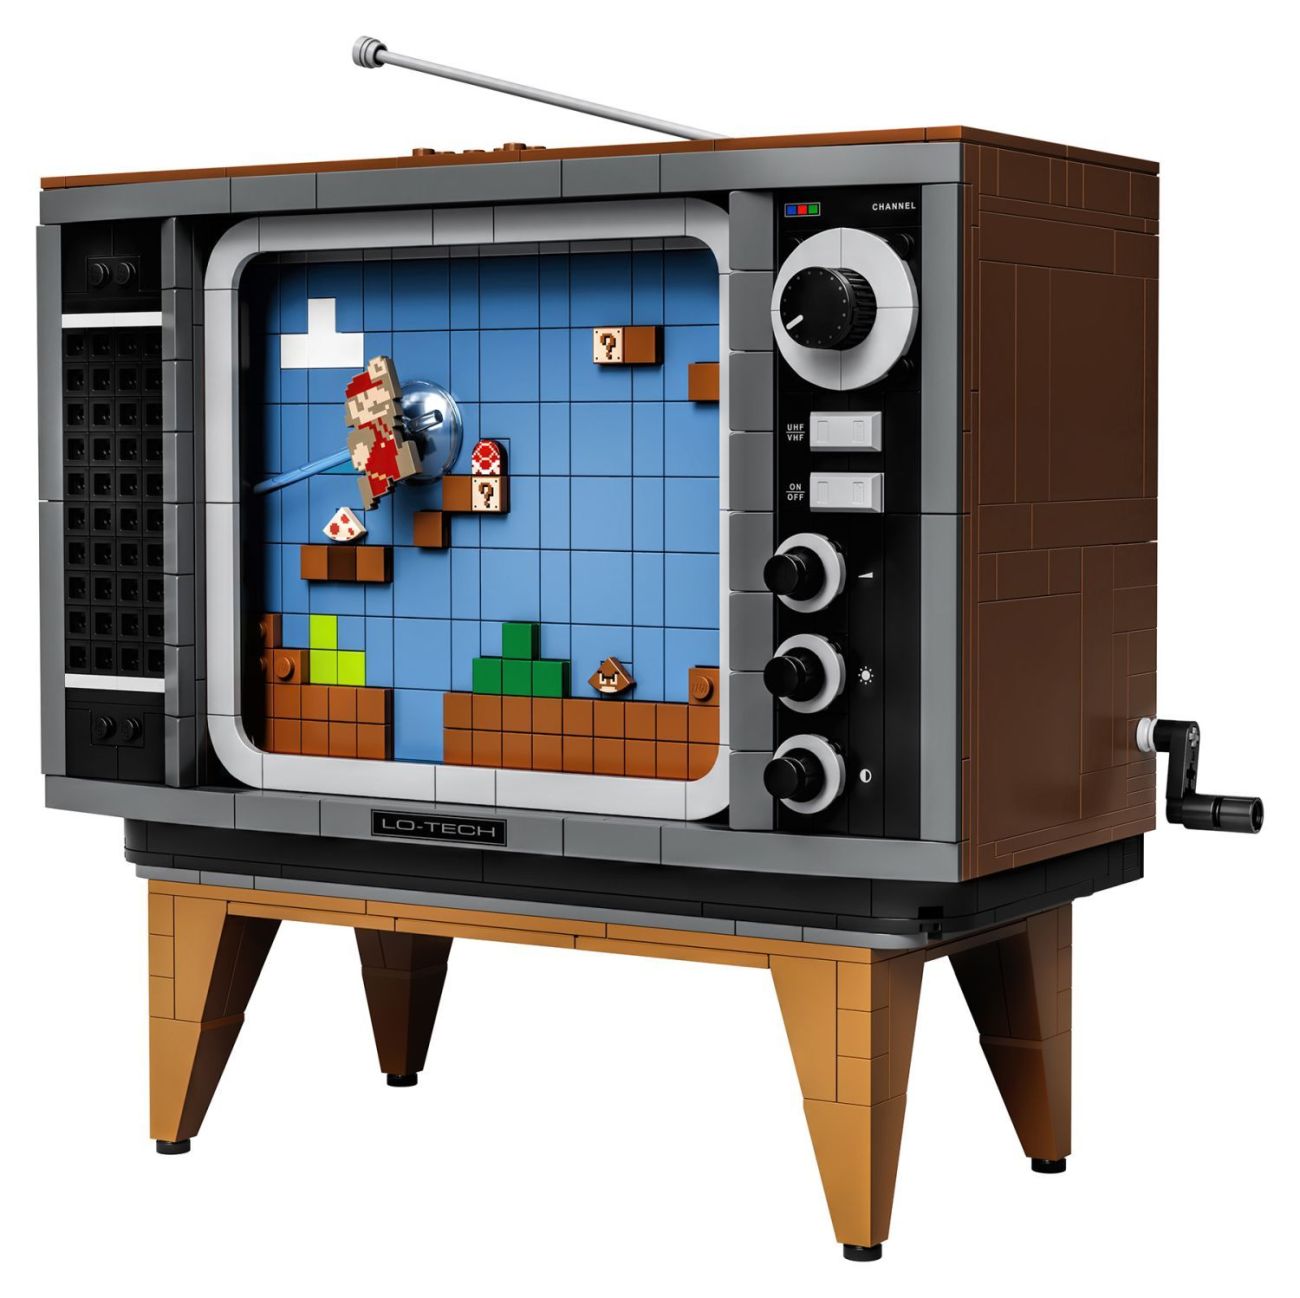 LEGO 71374 Nintendo Entertainment System jetzt offiziell vorgestellt